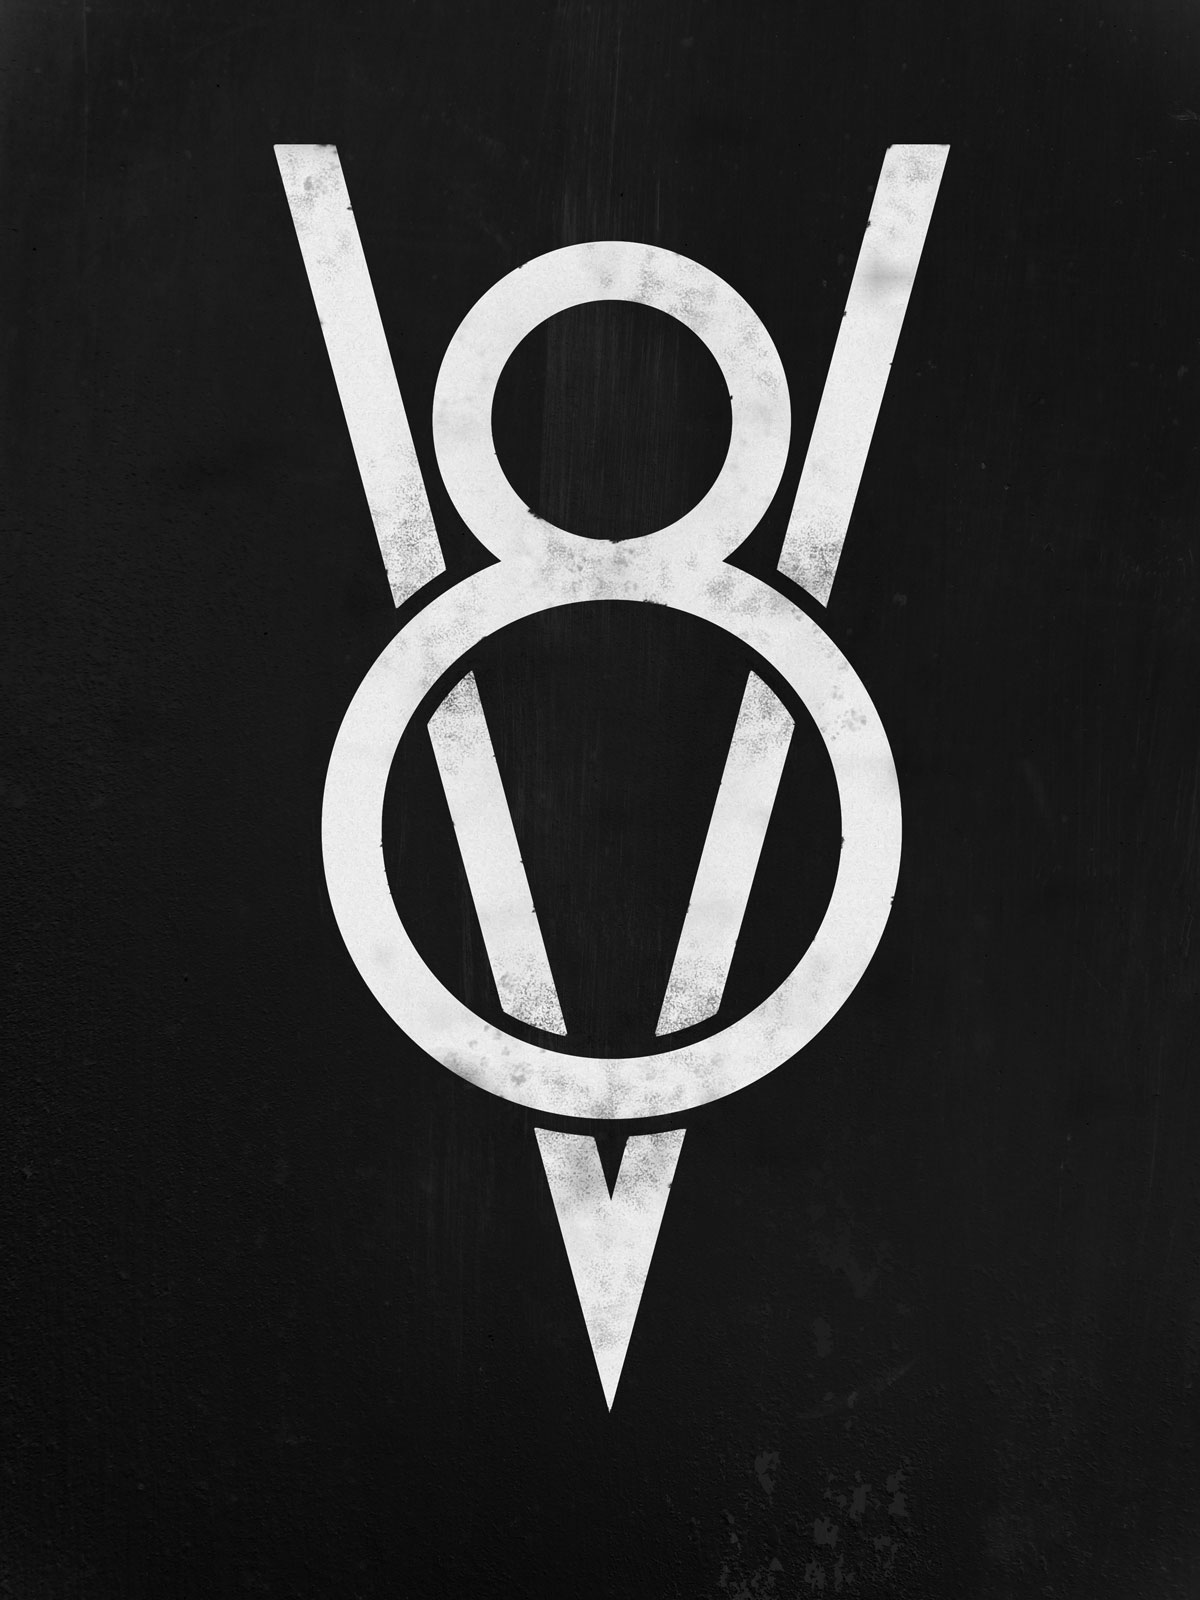 V 008. V8 логотип. 8 Эмблема. Ава логотип восьмерки. Значок v.